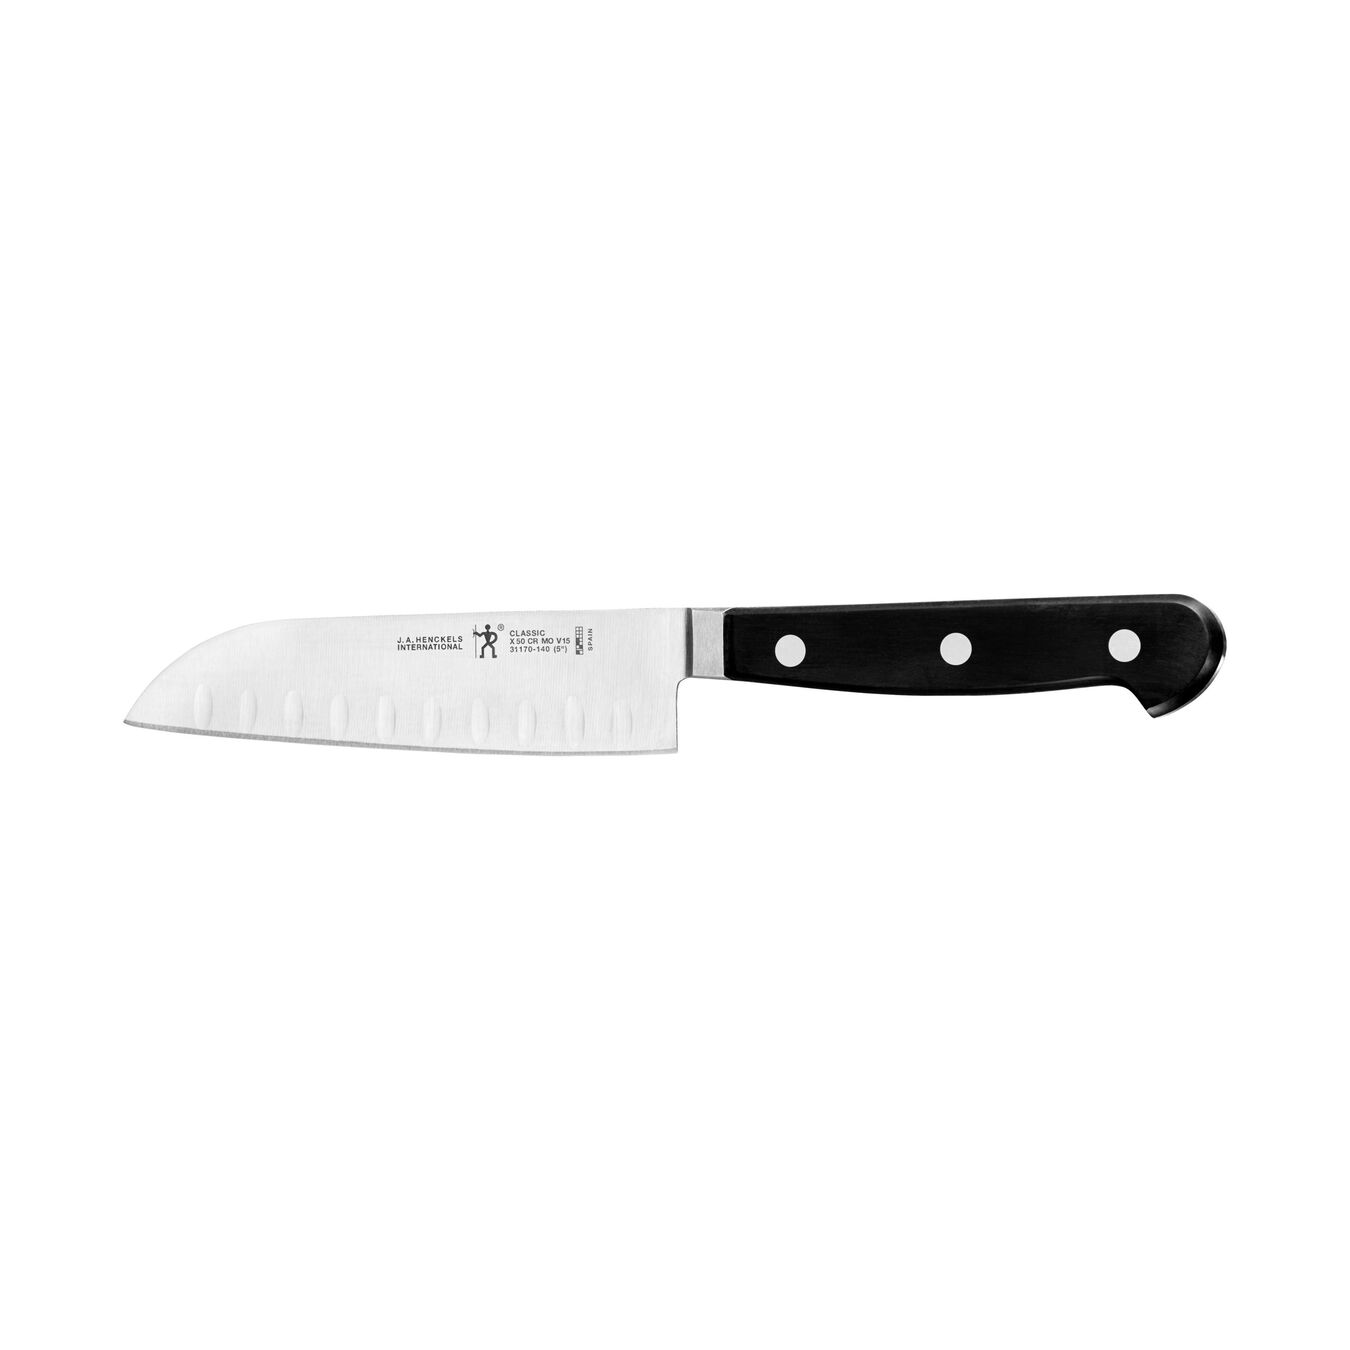 5-inch, Hollow Edge Santoku Knife,,large 1